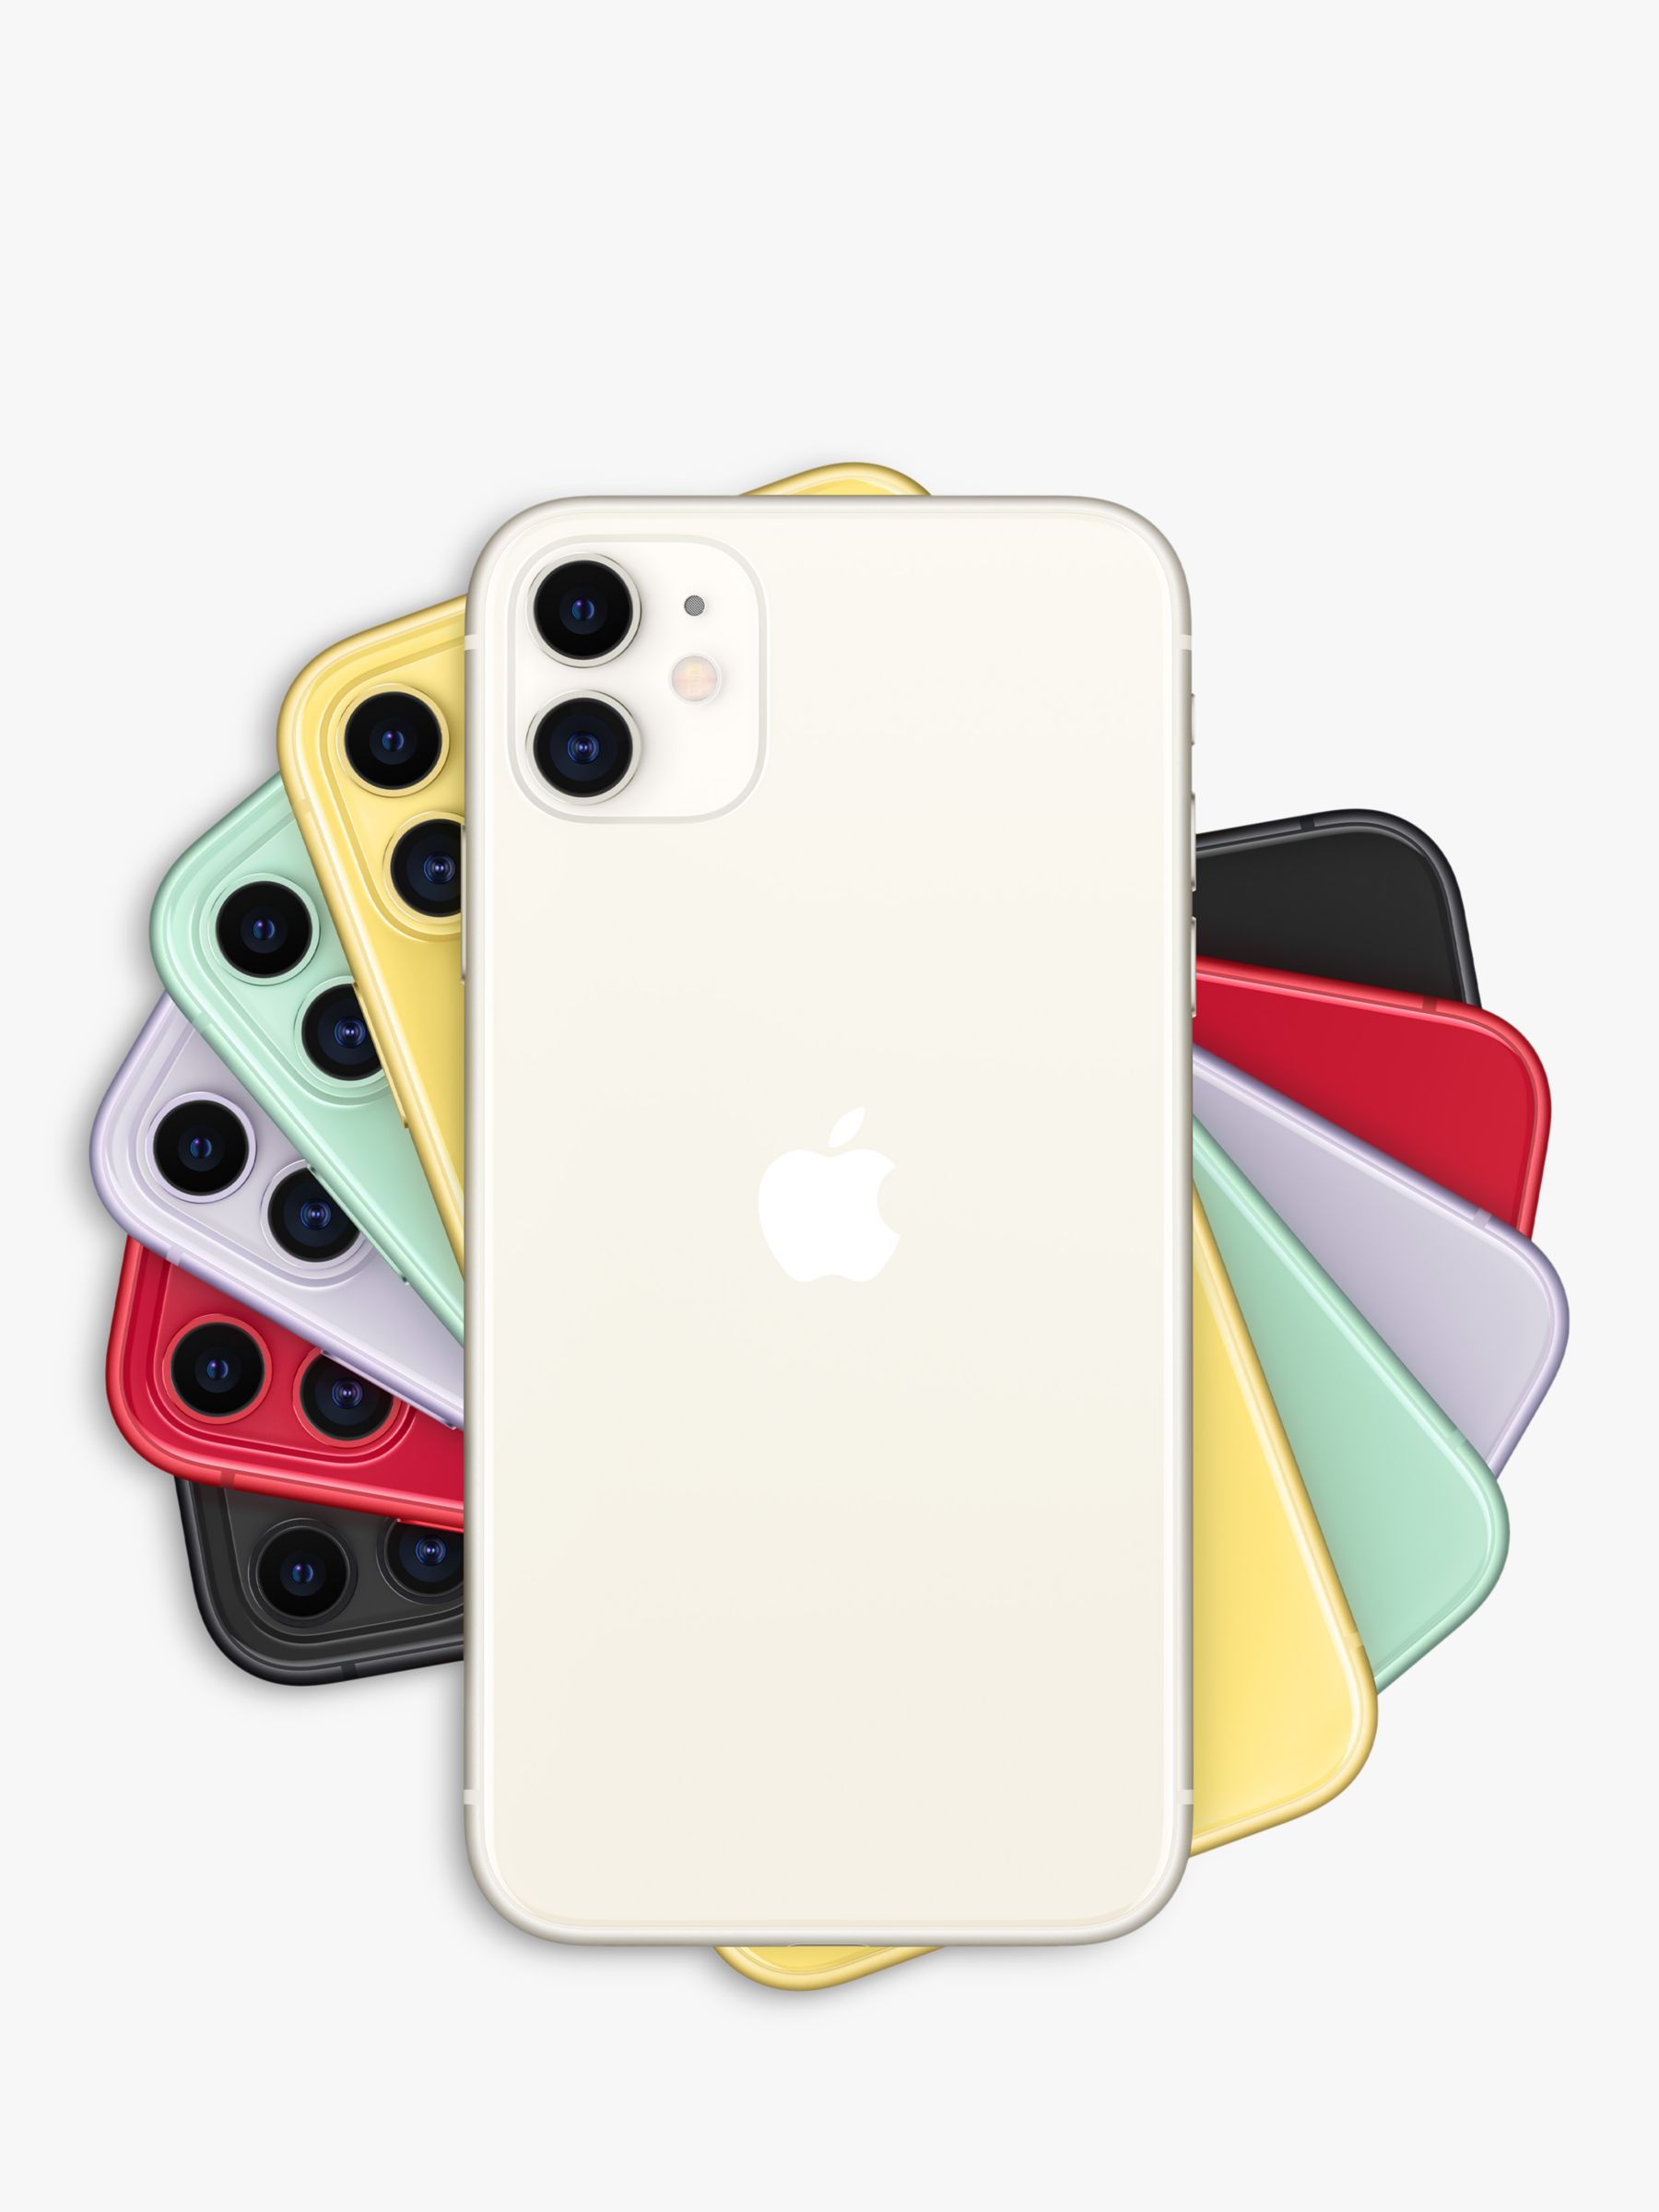 Apple Iphone 11 Ios 6 1 4g Lte Sim Free 128gb White